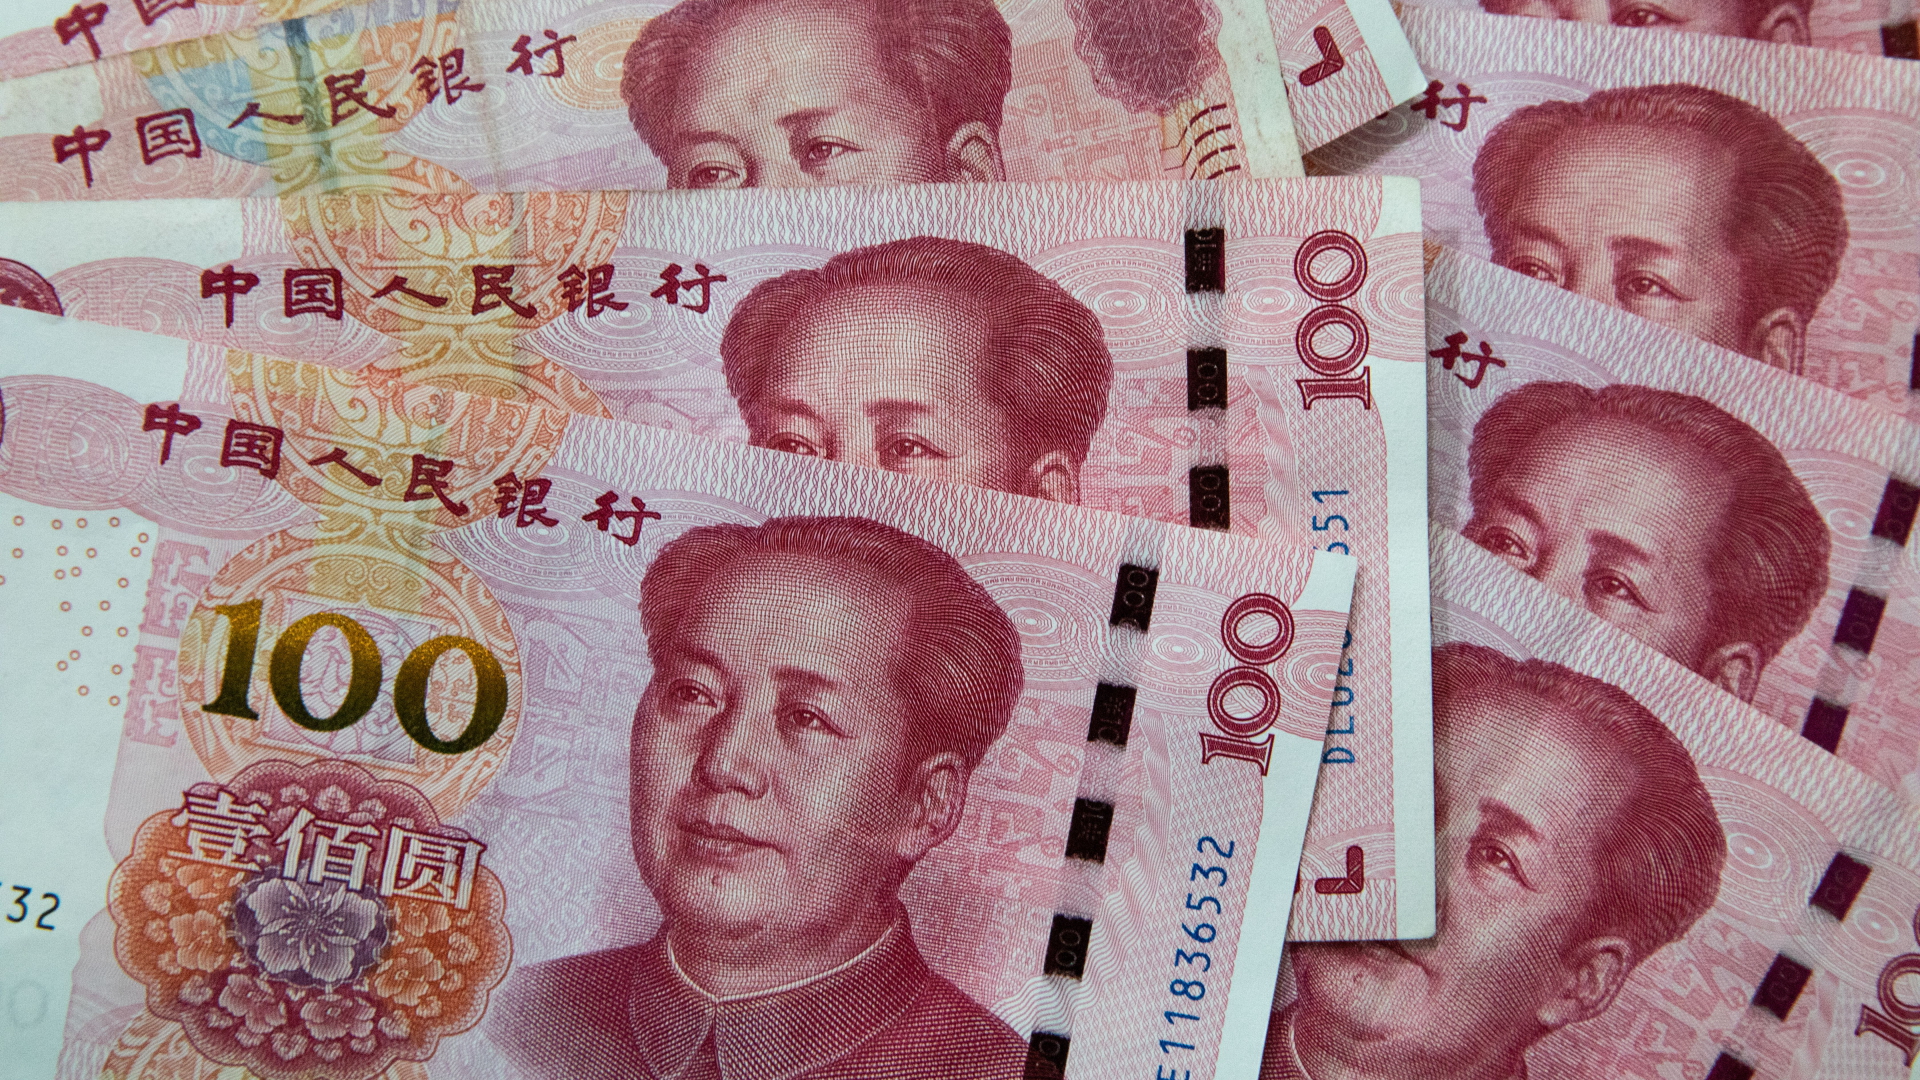 Yuan-Banknoten | ROMAN PILIPEY/EPA-EFE/REX